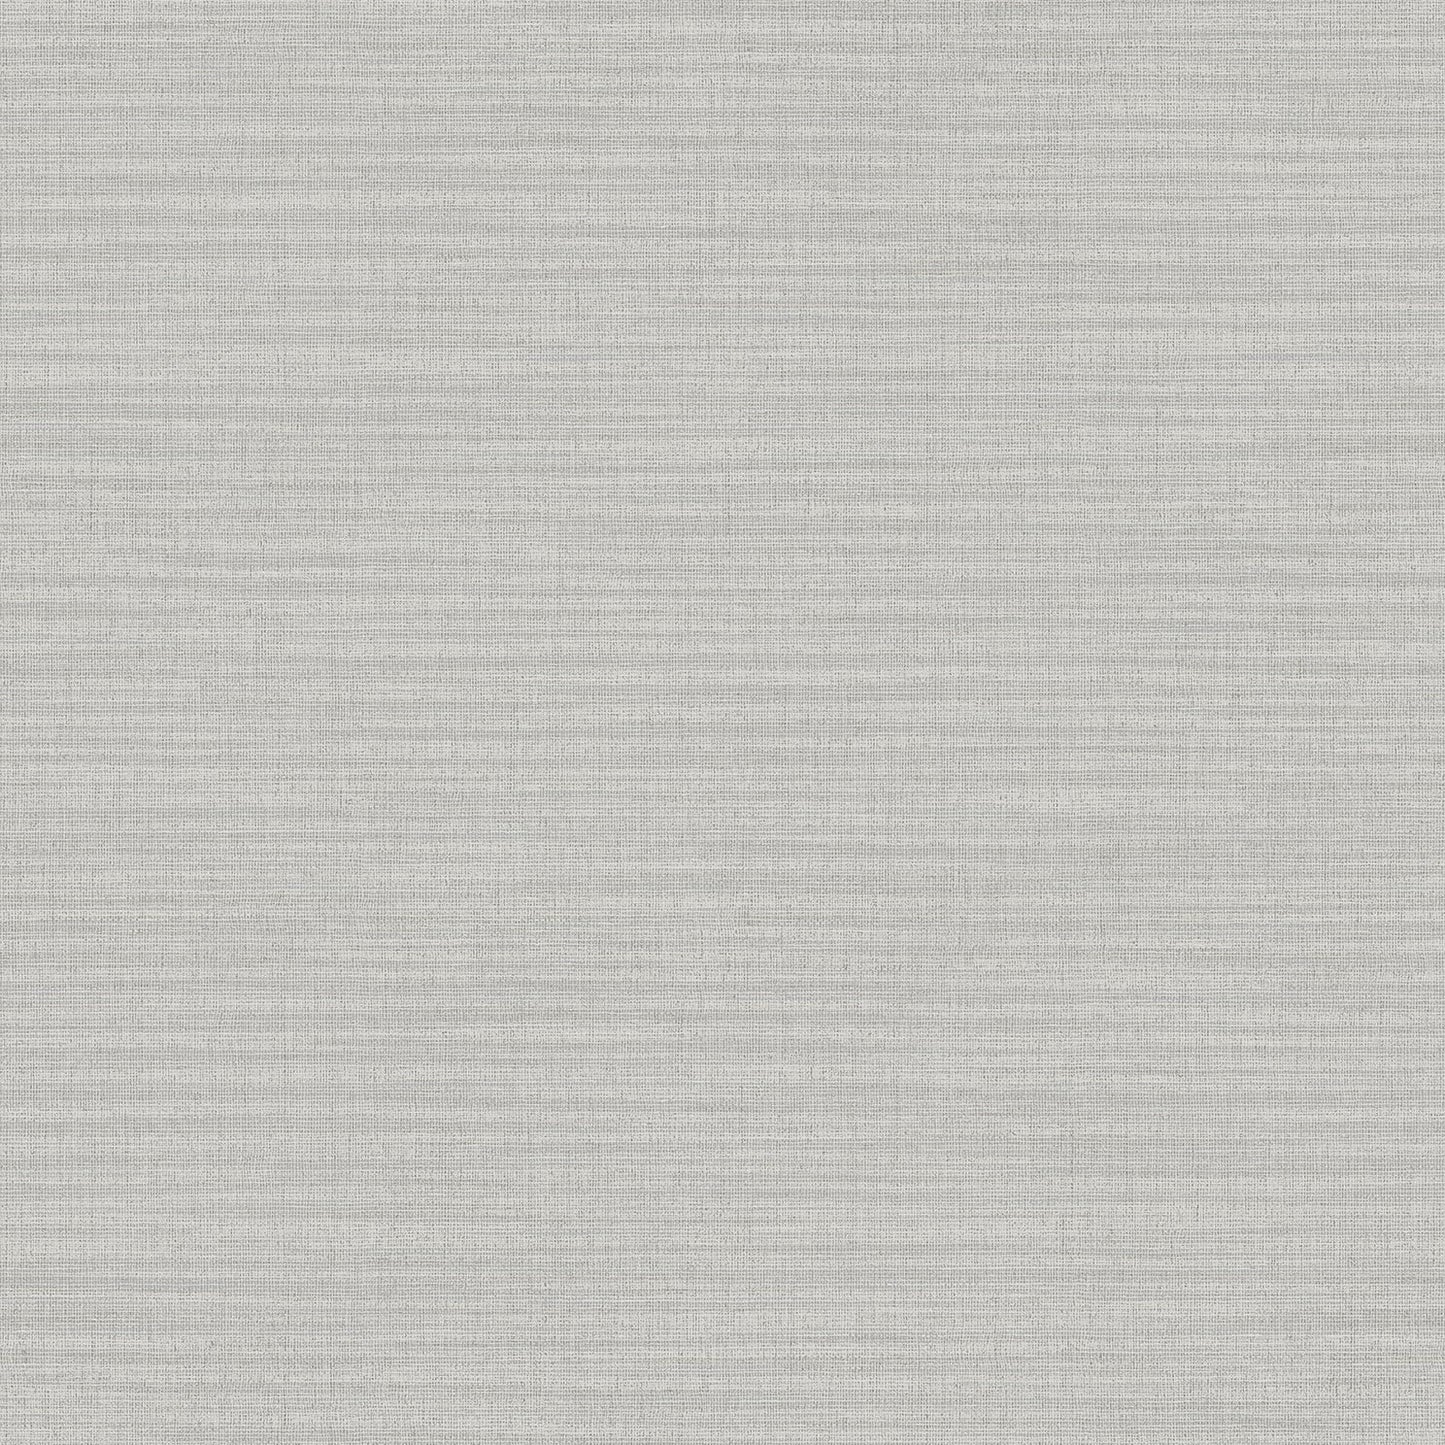 Shop 2836-MKE-3110 Shades of Grey Greys Fabric Textures Wallpaper by Advantage